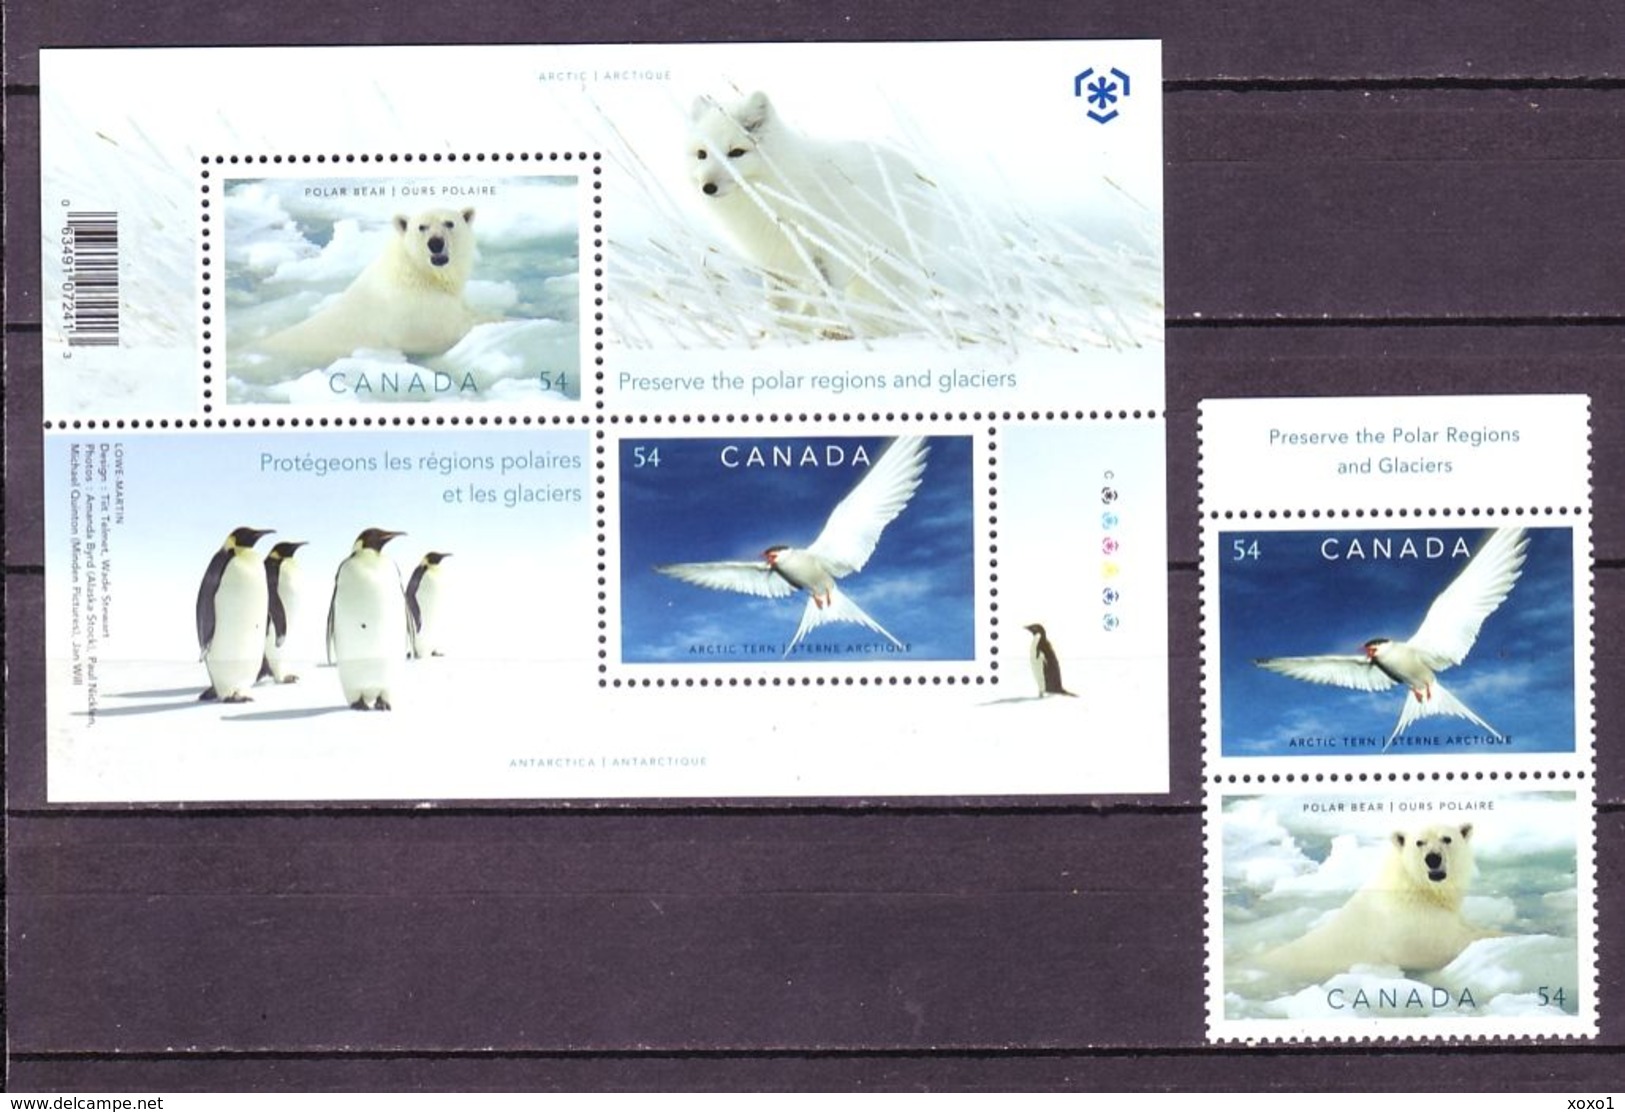 Canada 2009 MiNr. 2547 - 2548 (Block 113) Kanada Fauna BIRDS POLAR YEAR 2v+1bl MNH** 4.80 € - Année Polaire Internationale